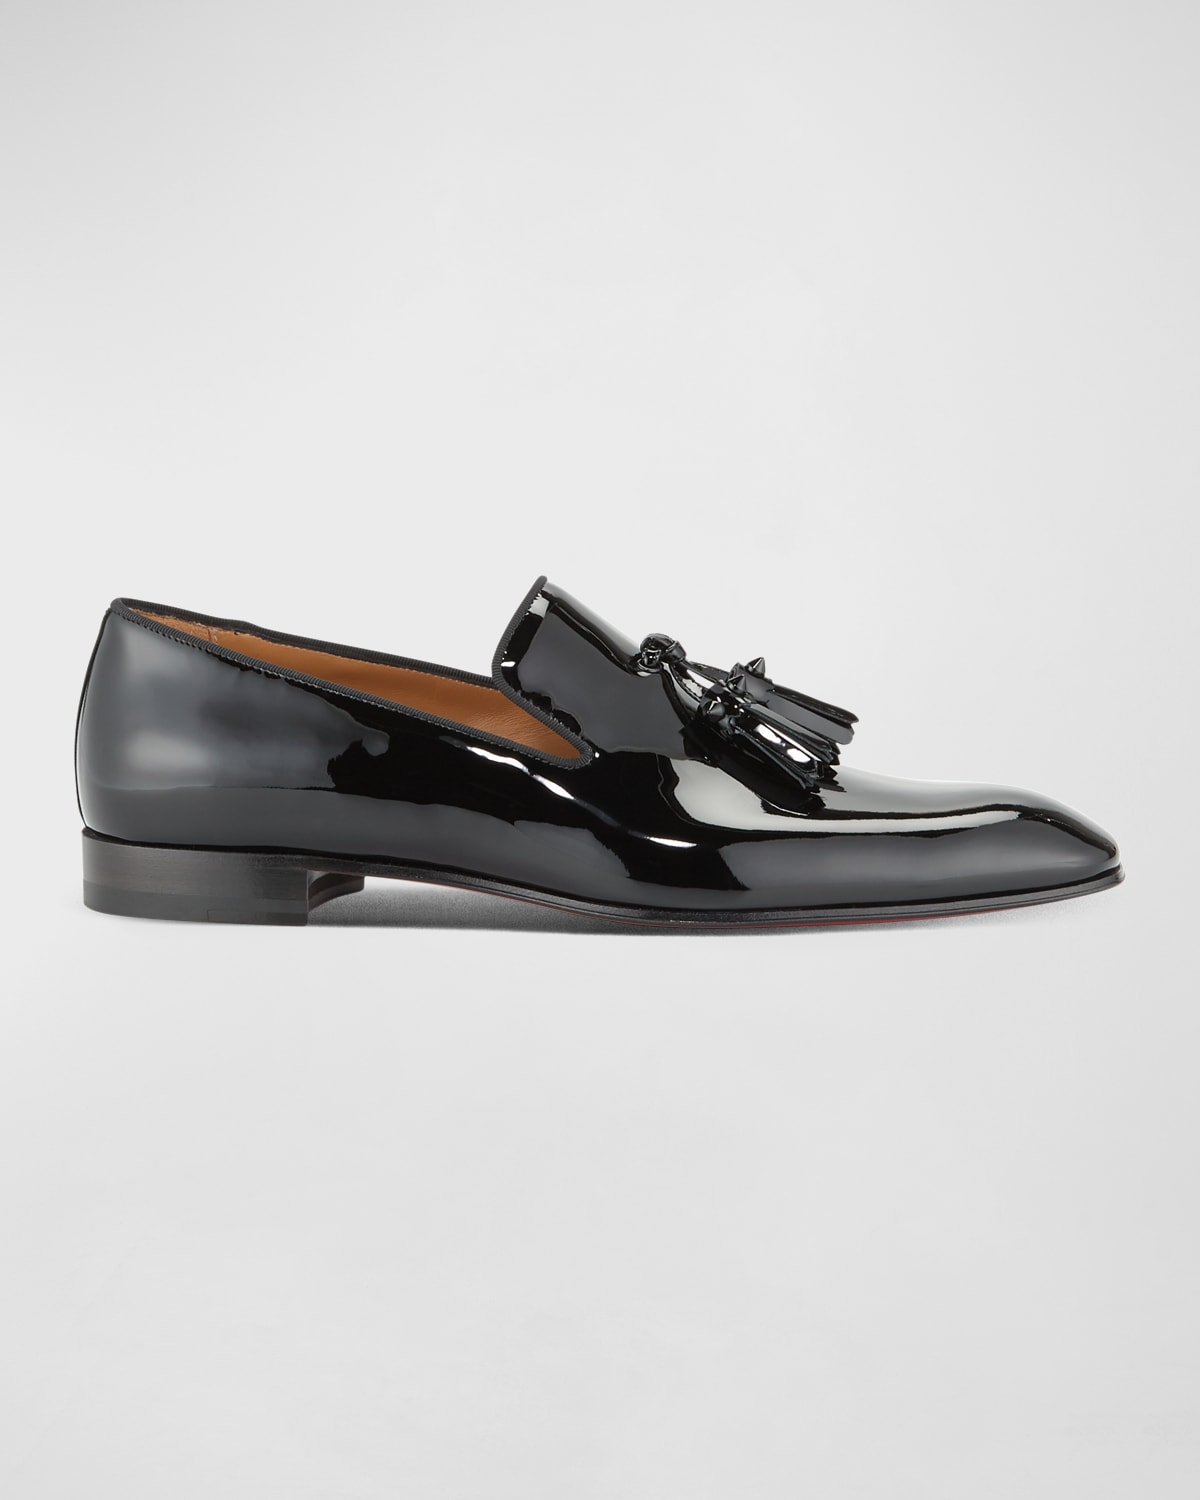 Christian Louboutin Dandelion Patent Leather Tassel Loafers | Neiman Marcus